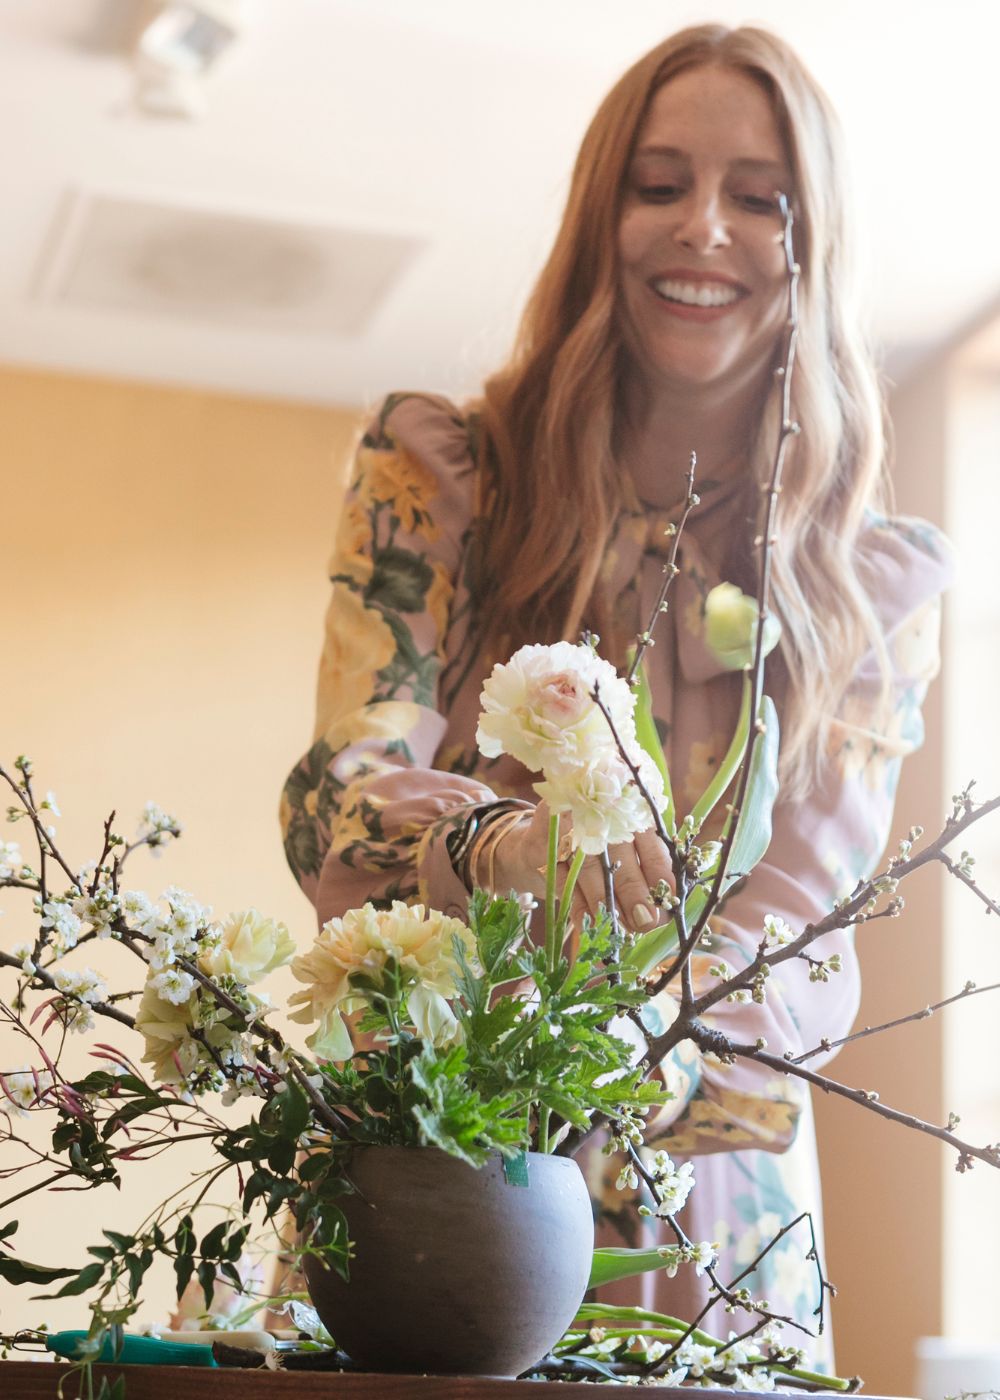 Spring Floral Centerpieces A Workshop Featuring Natalie Bowen Brookshire | May 4, 2024 - Menagerie Farm &amp; Flower